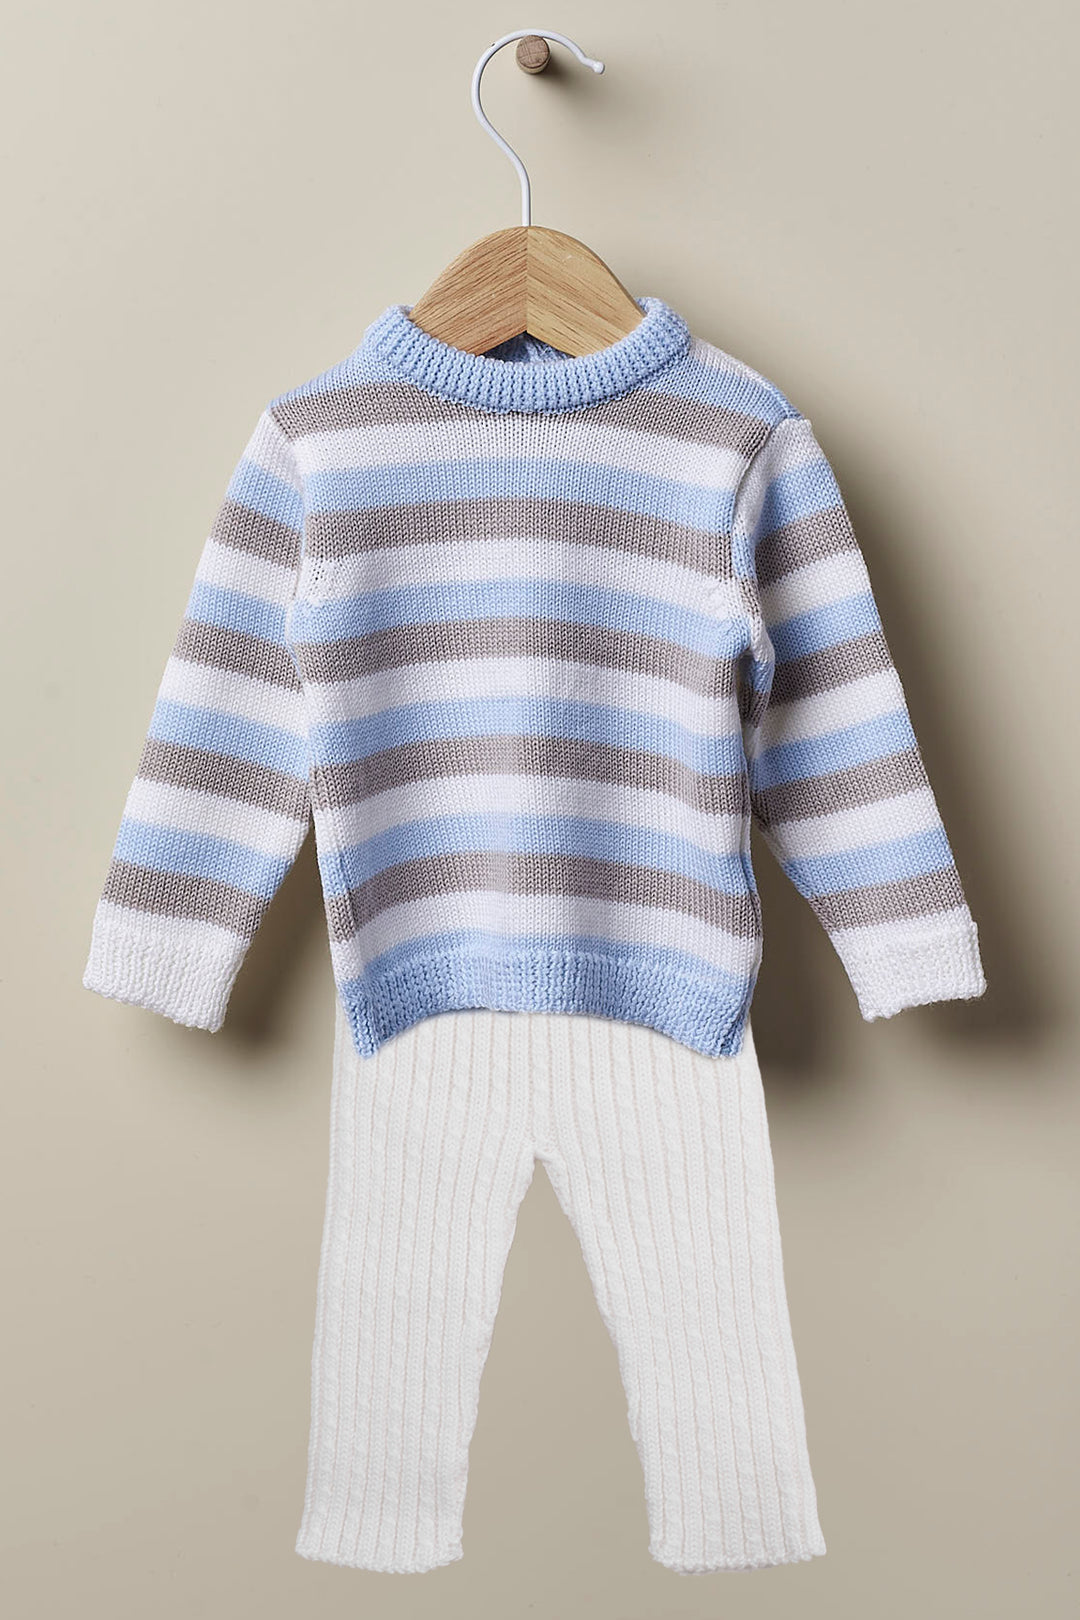 Wedoble "Alberto" Blue Striped Knit Top & Leggings | Millie and John